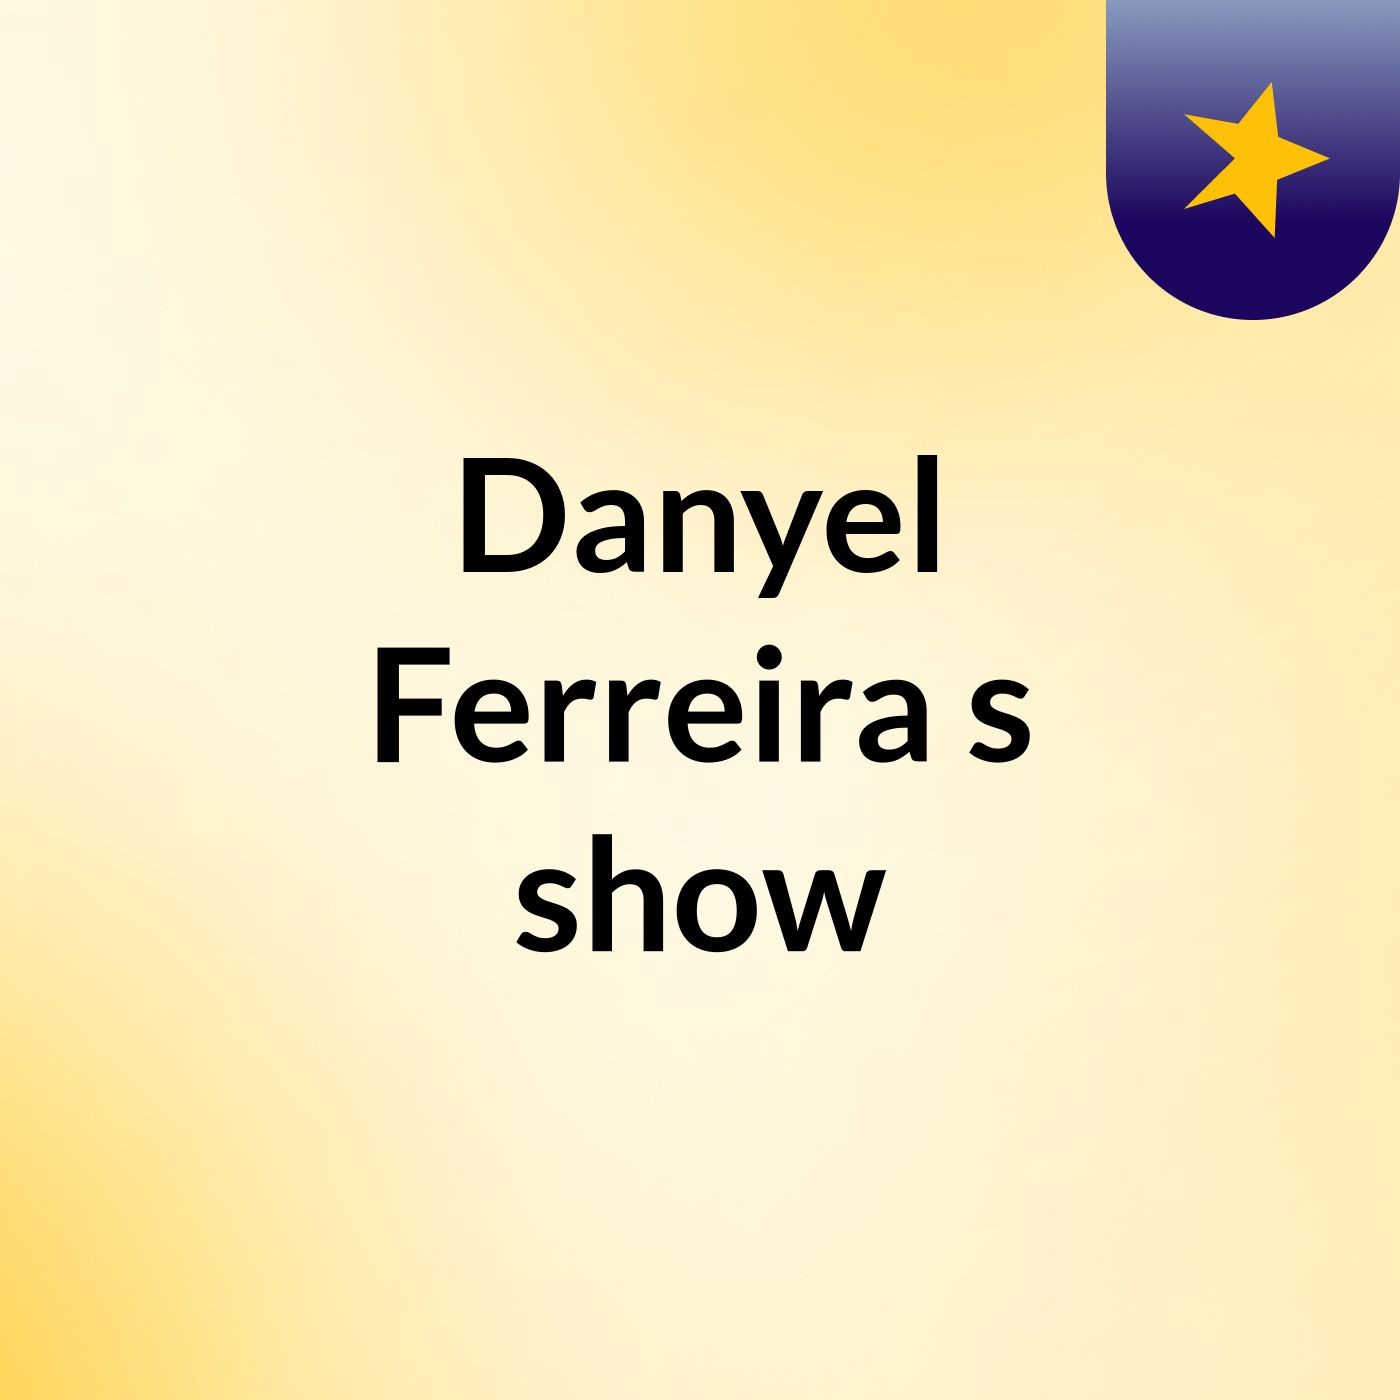 Danyel Ferreira's show